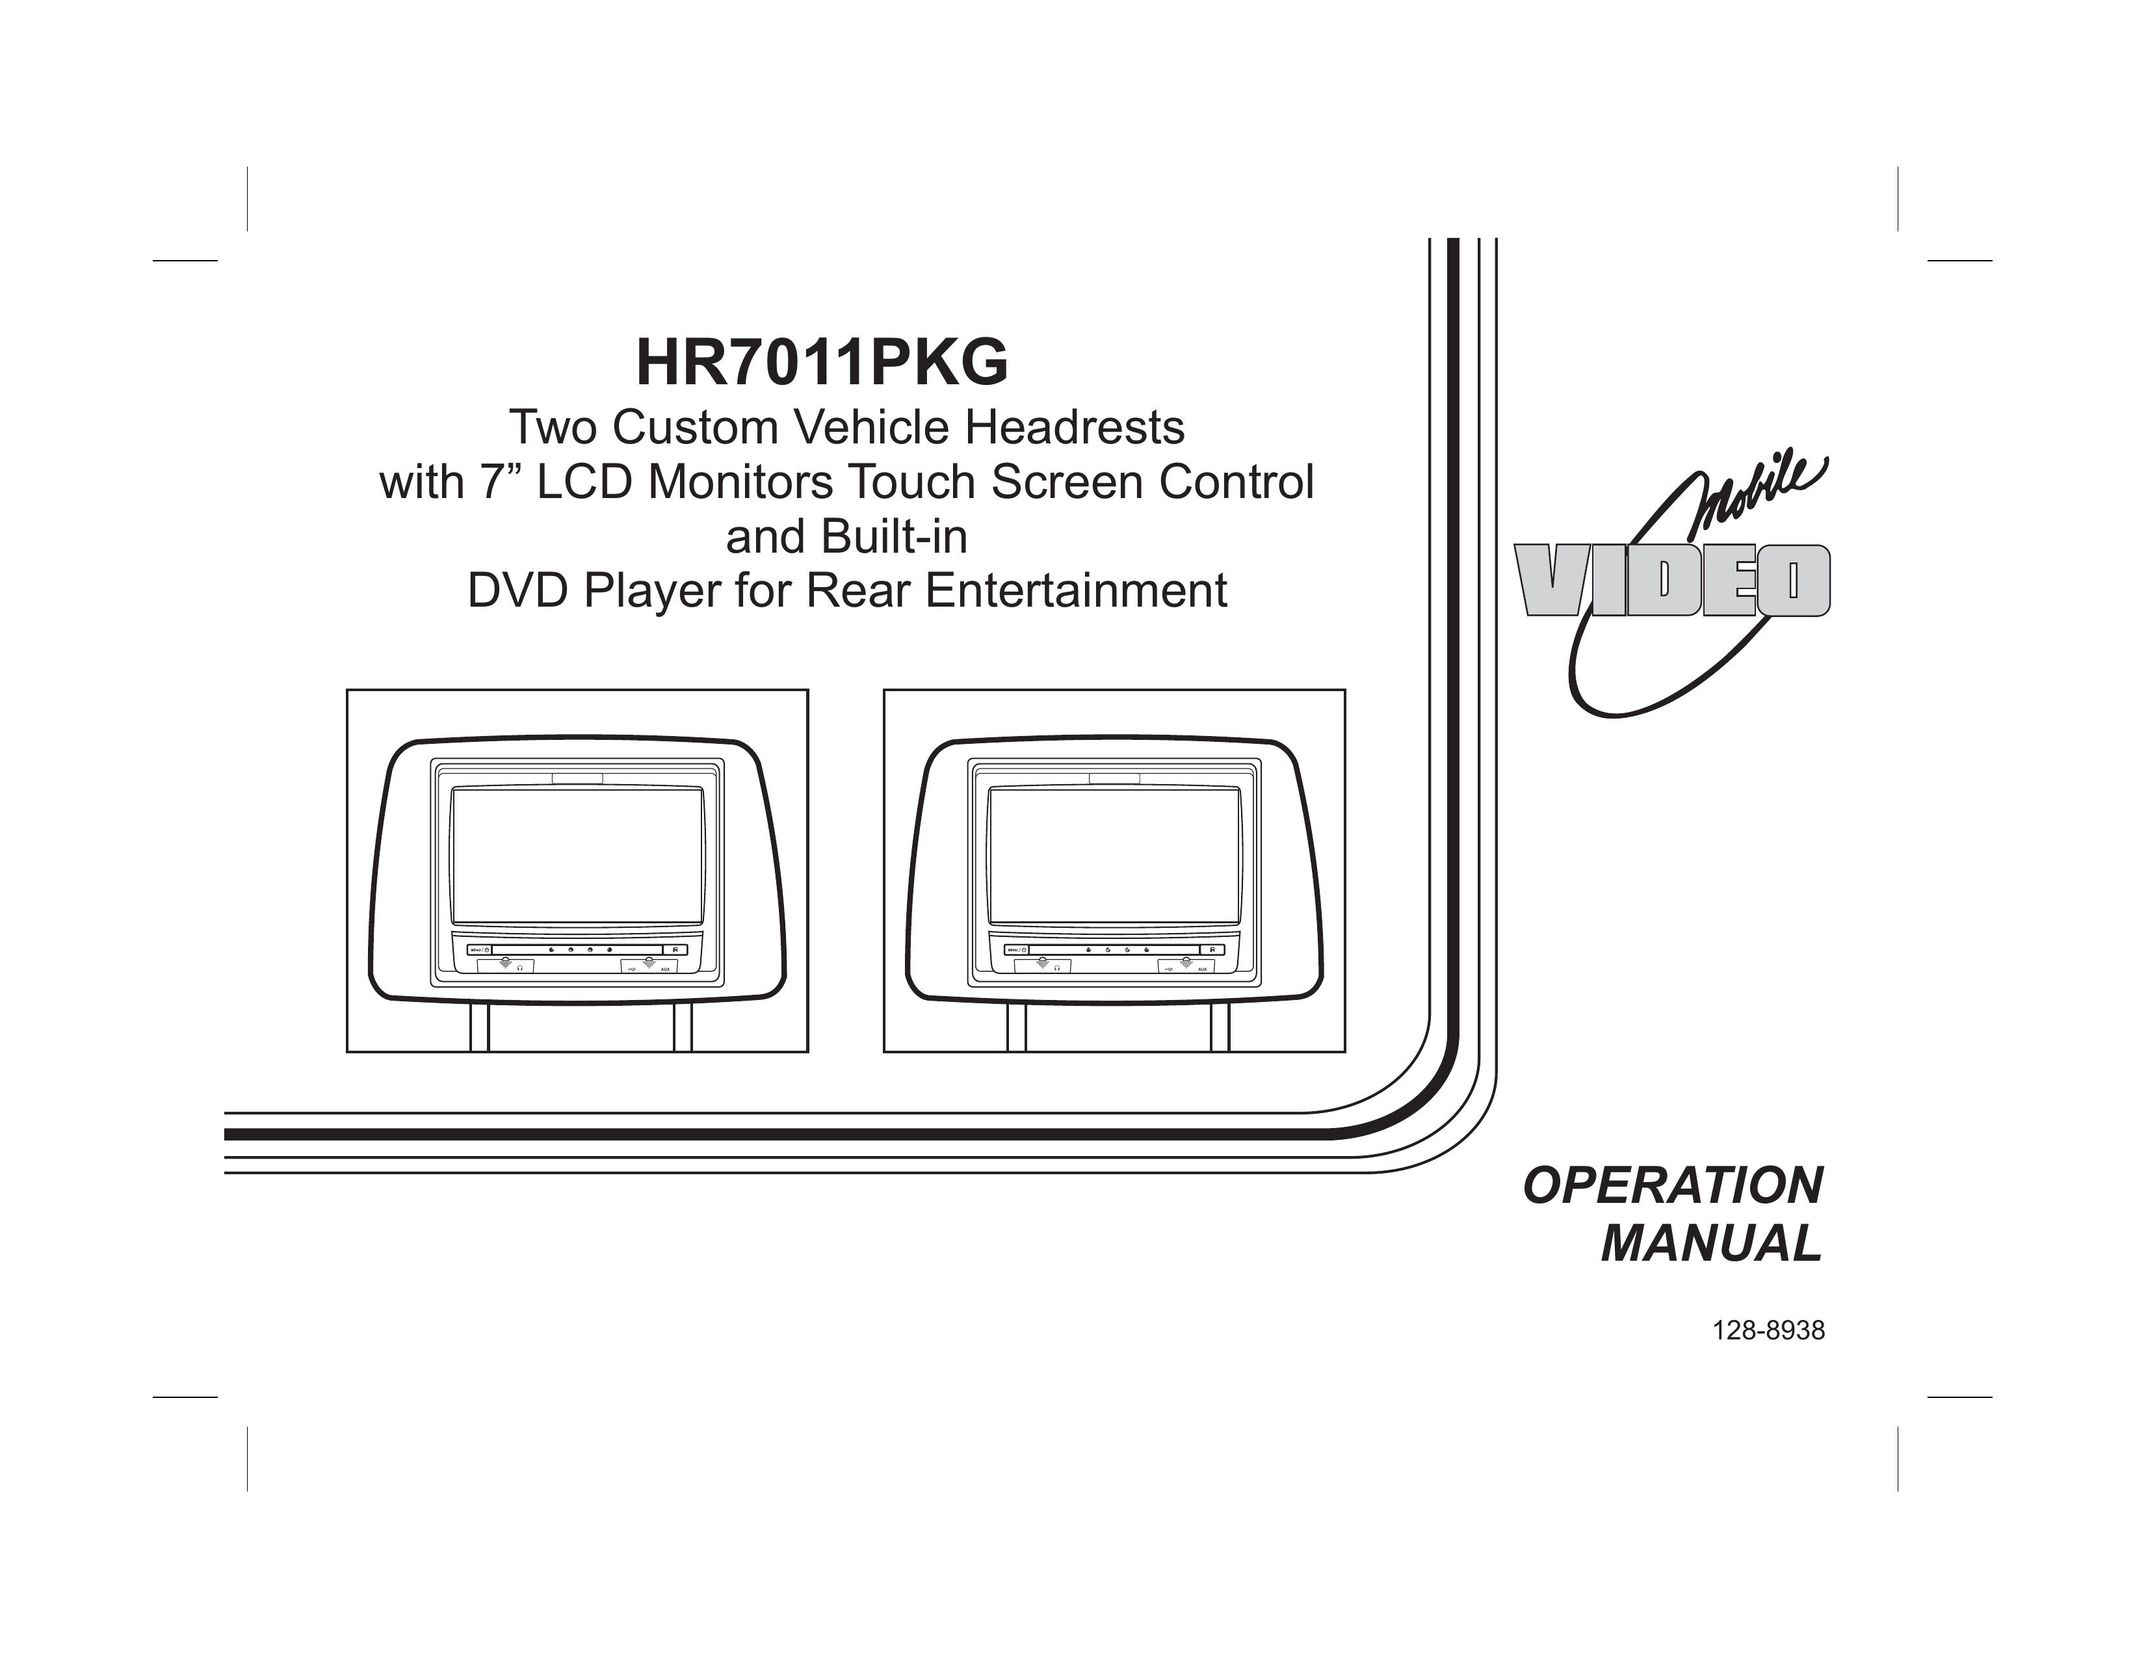 Audiovox HR7011PKG Car Video System User Manual